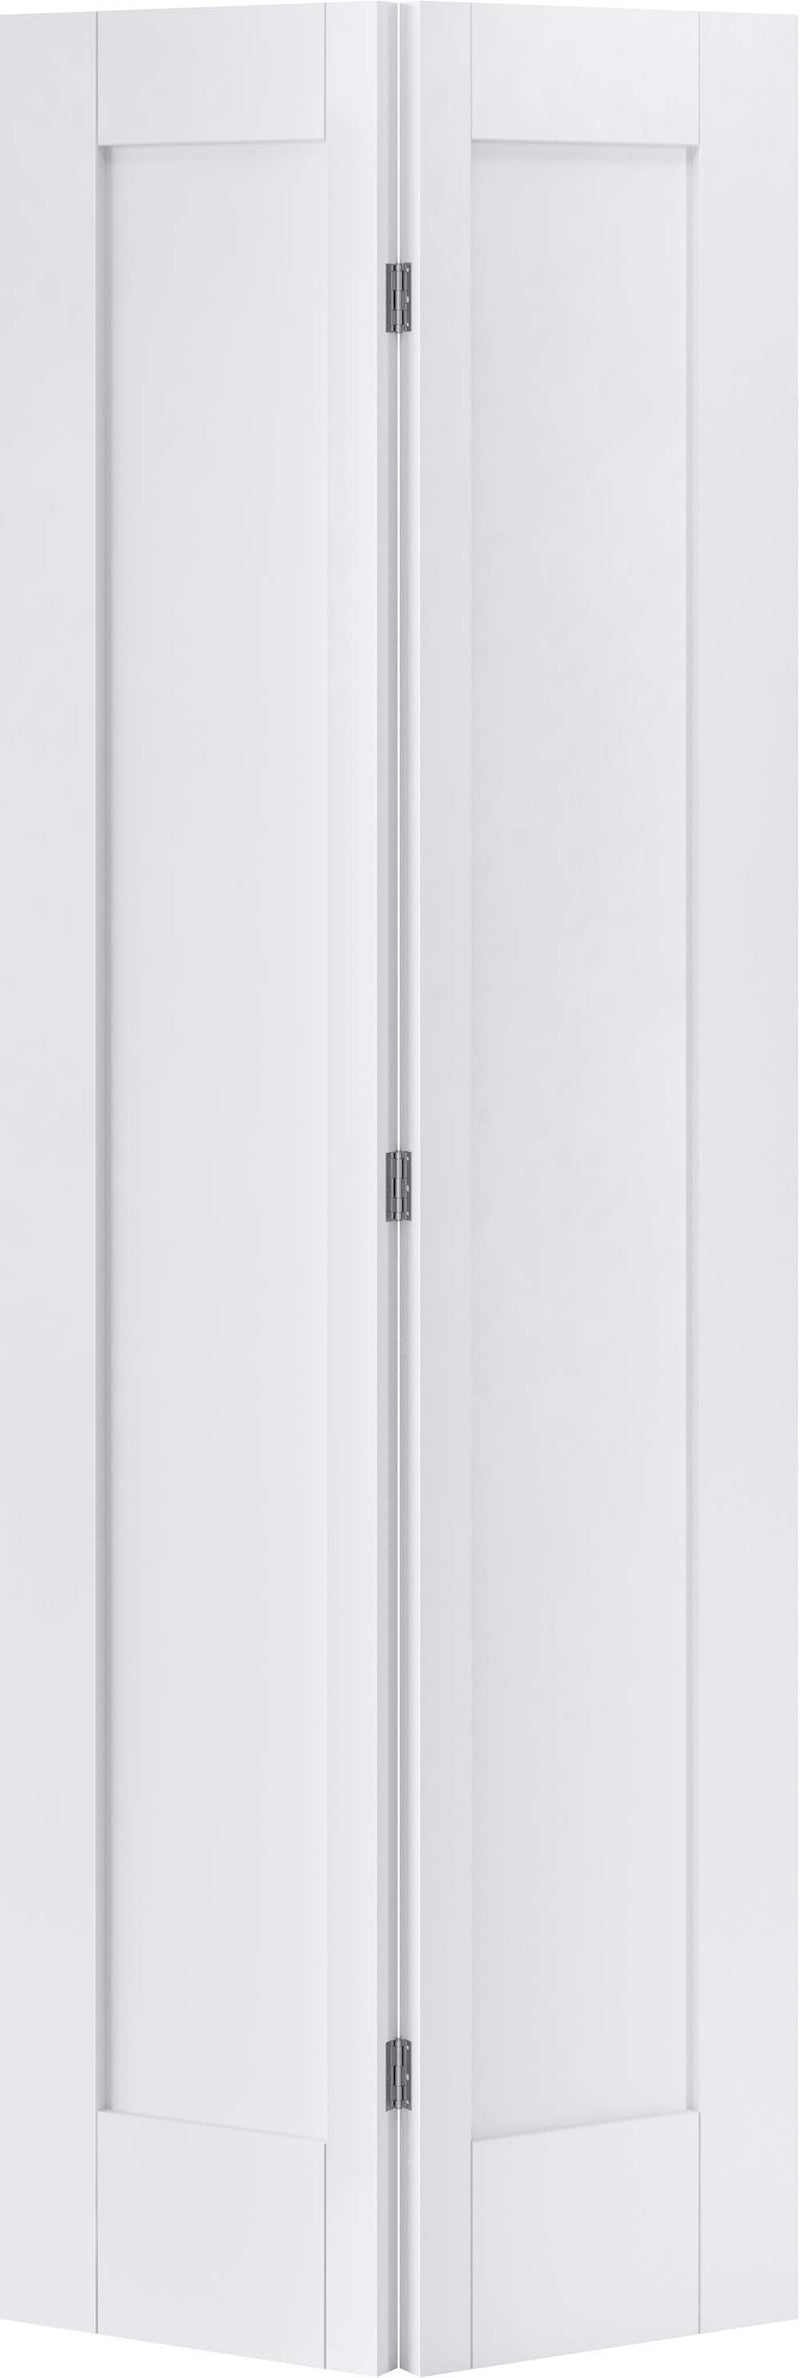 White Primed Pattern 10 Internal Door